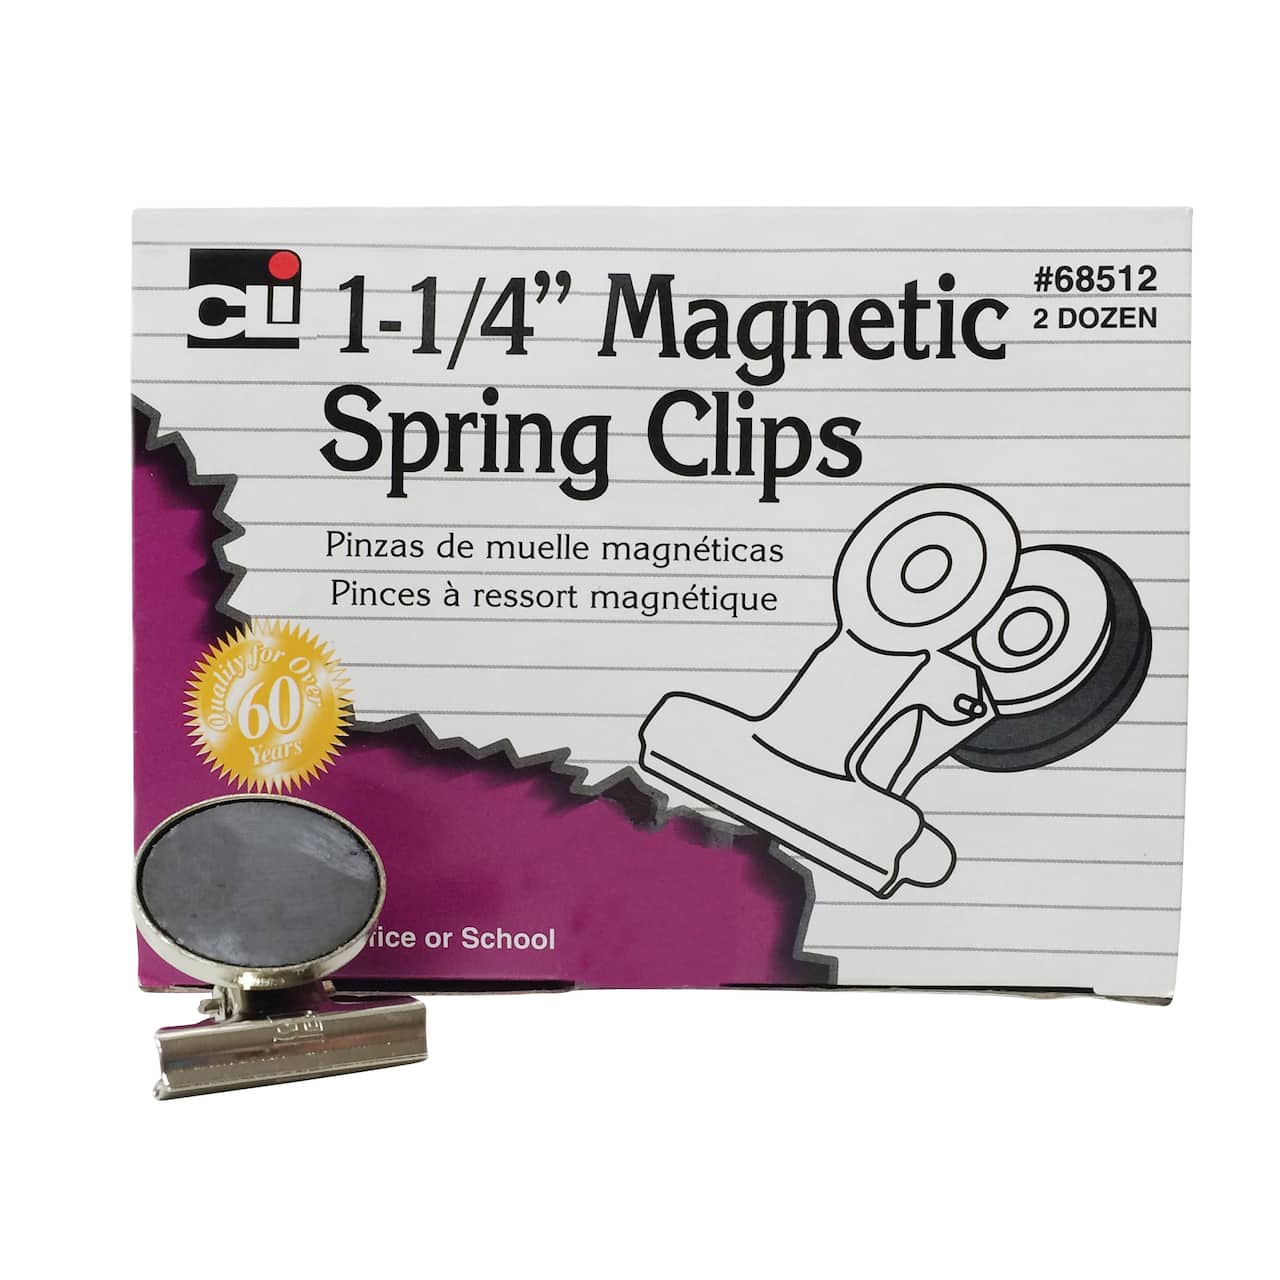 Charles Leonard Magnetic Spring Clips